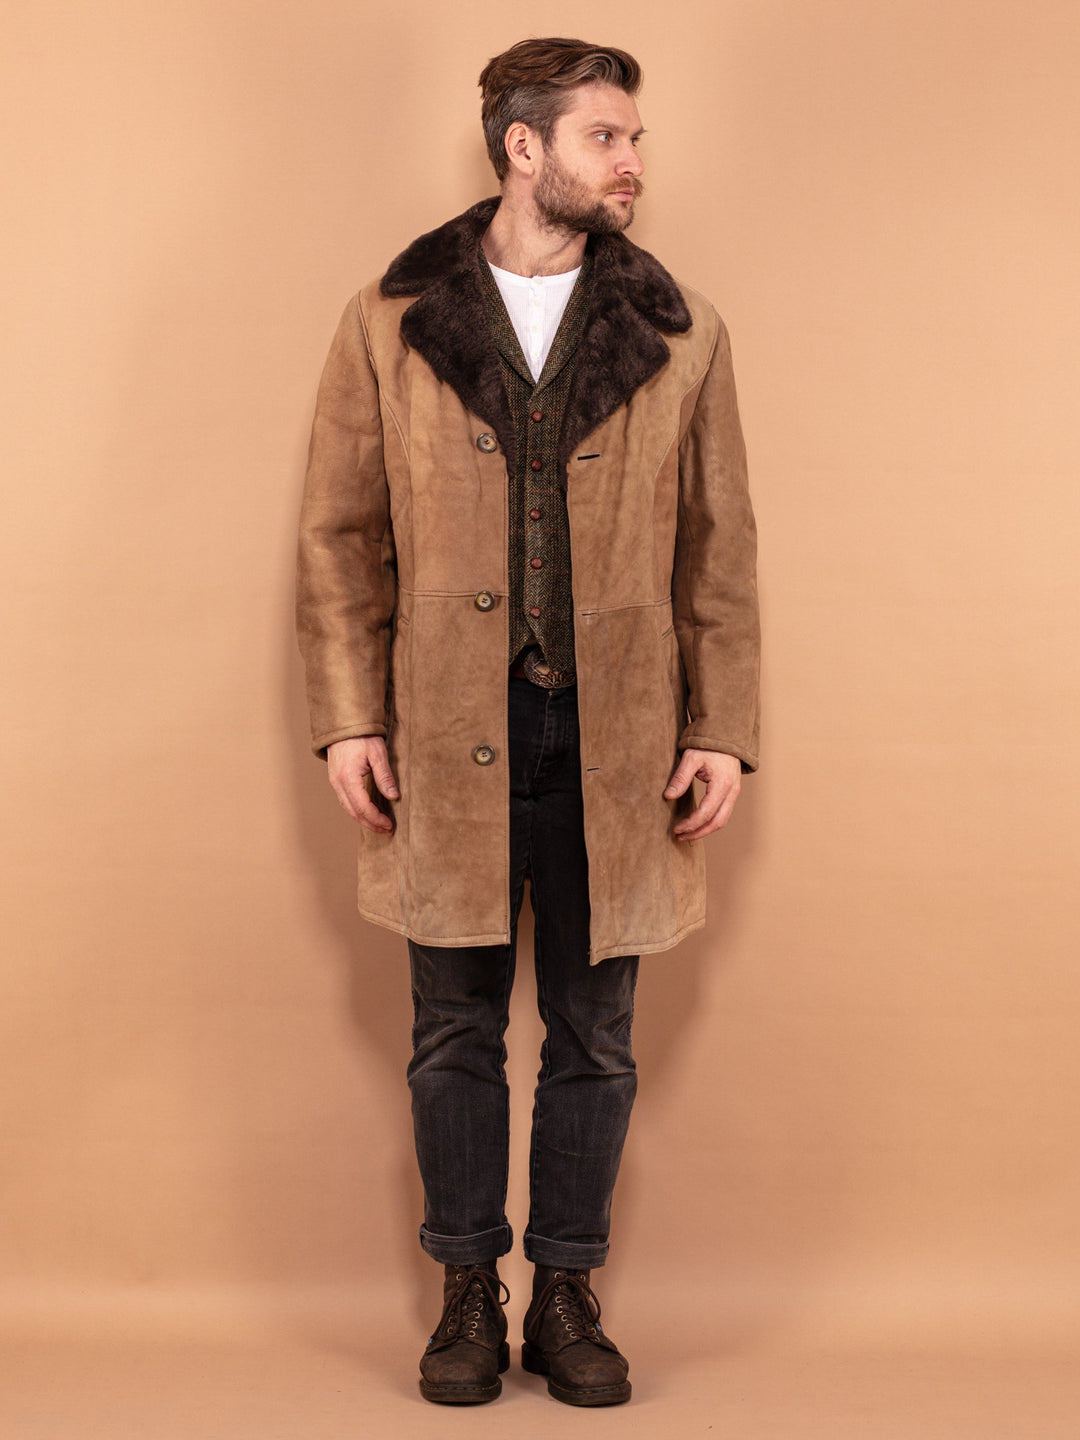 70s Sheepskin Coat, Size M Medium, Vintage Shearling Fur Coat, Boho Winter Coat, Warm Coat for Men, Light Brown Overcoat, Retro Menswear